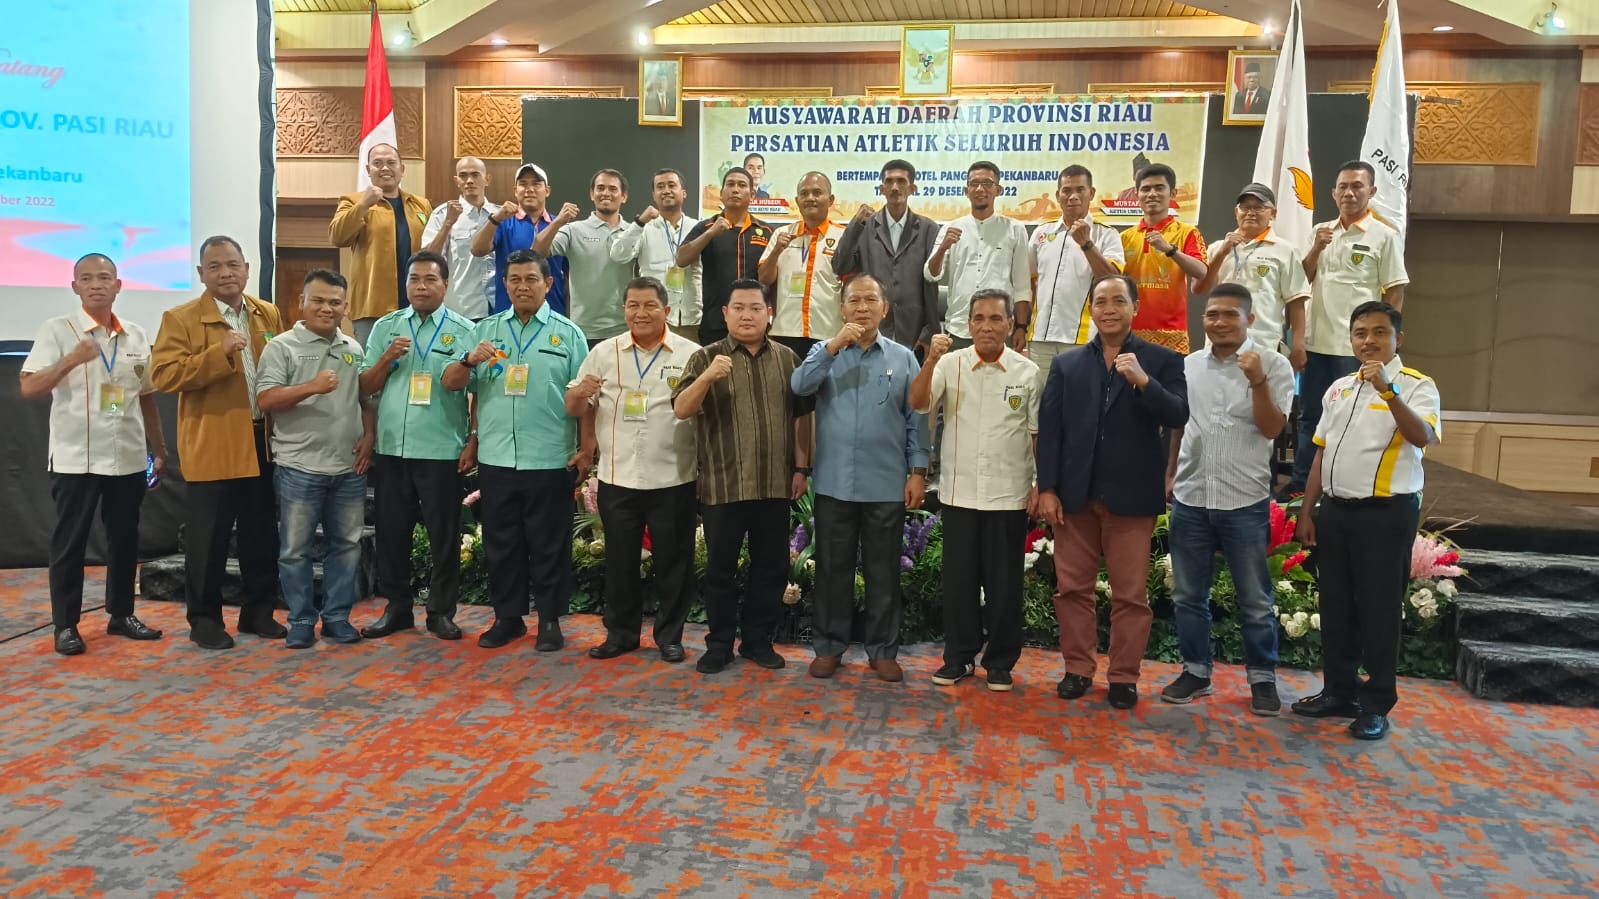 Aklamasi, Yulisman Jadi Ketua PASI Riau